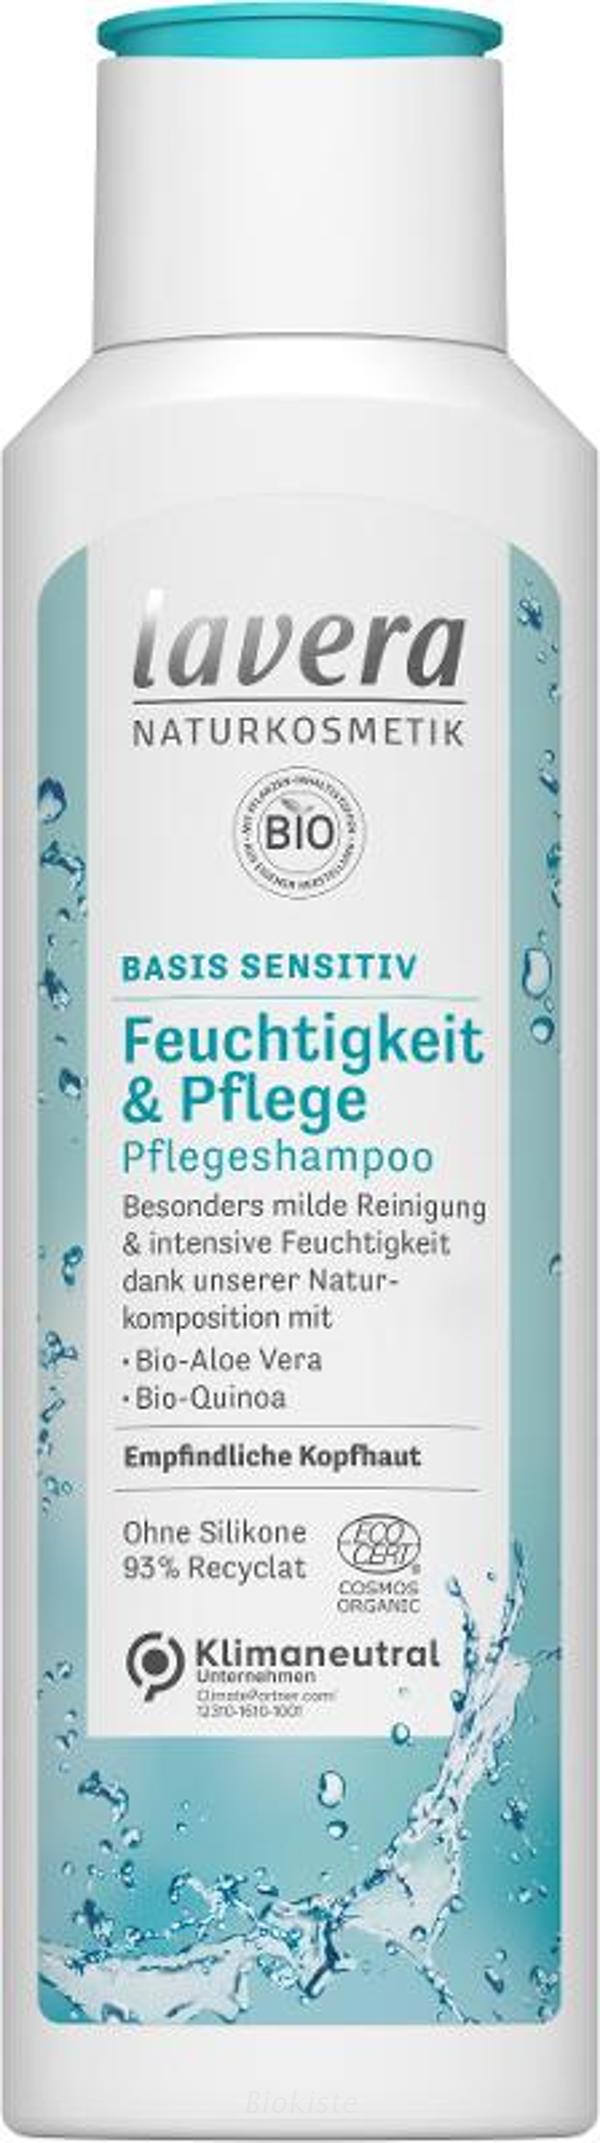 Produktfoto zu basis sensitiv Shampoo Feuchtigkeit 250 ml